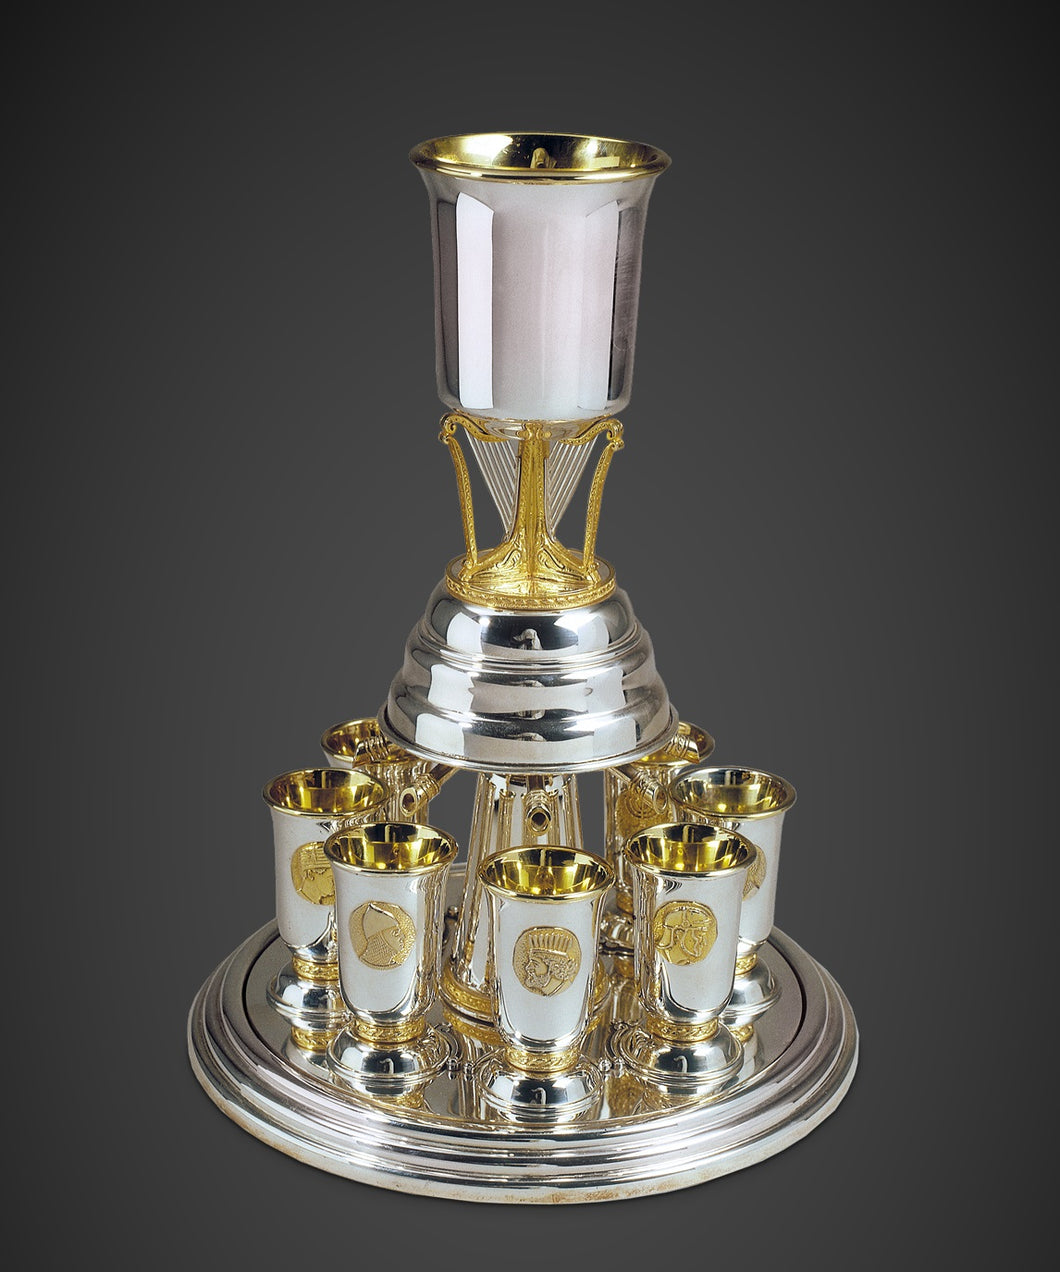 The Jerusalem Heritage Fulfilling Cup